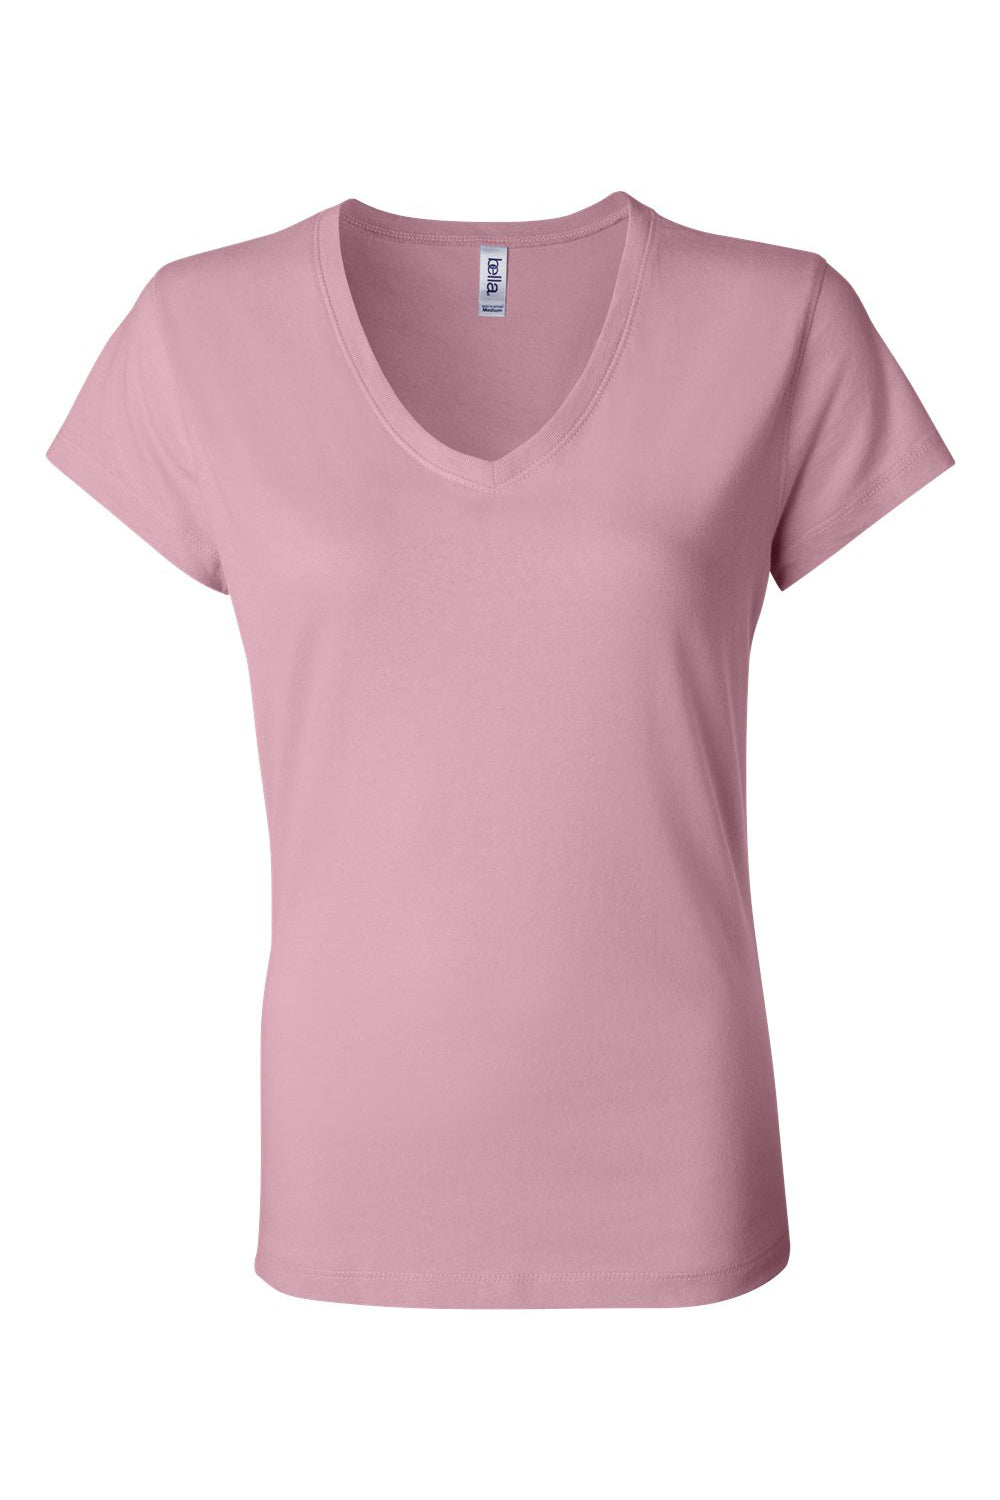 Bella + Canvas B6005/6005 Womens Jersey Short Sleeve V-Neck T-Shirt Pink Flat Front